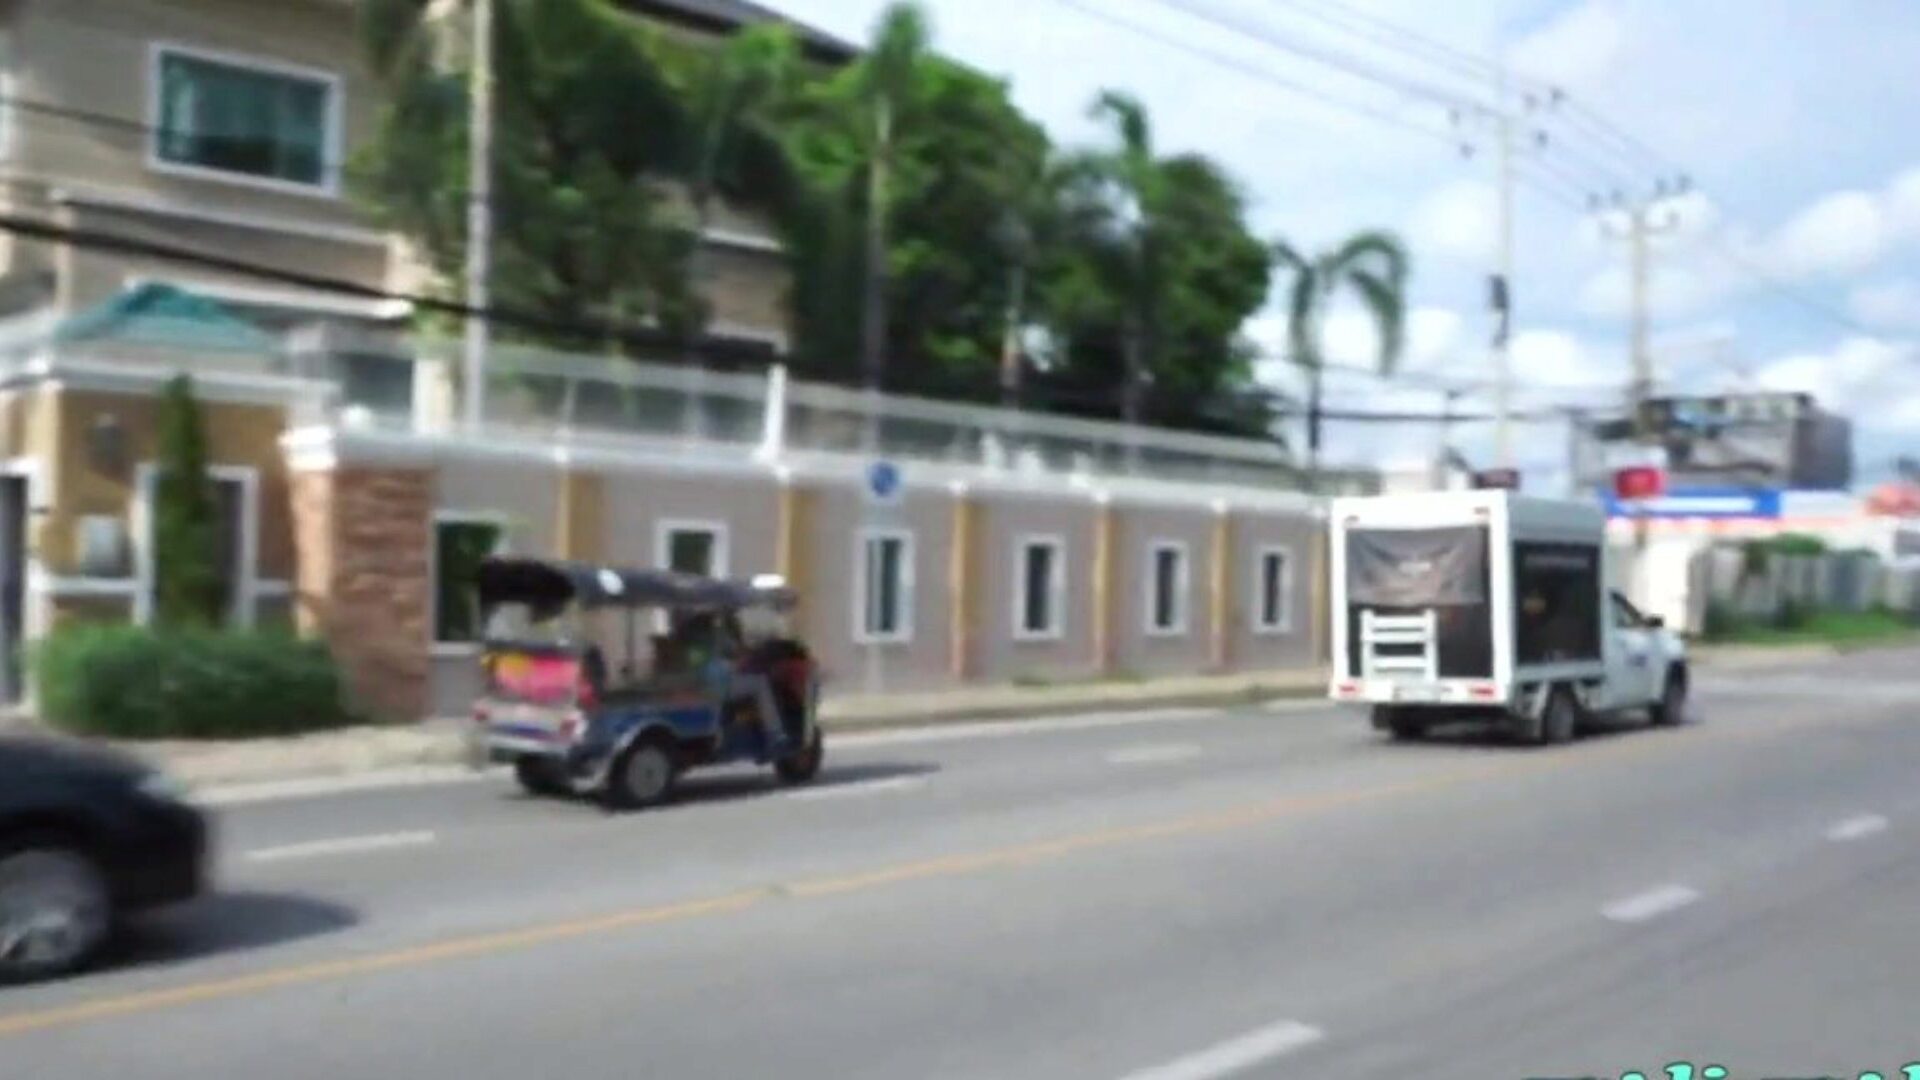 tuktukpatrol בשר-מוט pinay ספינר יש מתנות: פורנו hd 9c צפה tuktukpatrol בשר-מוט pinay ספינר יש מתנות סצנת סרטים על xhamster - המאגר האולטימטיבי של חינם אסיה חדש pinay hd קטעי וידאו פורנו הארדקור